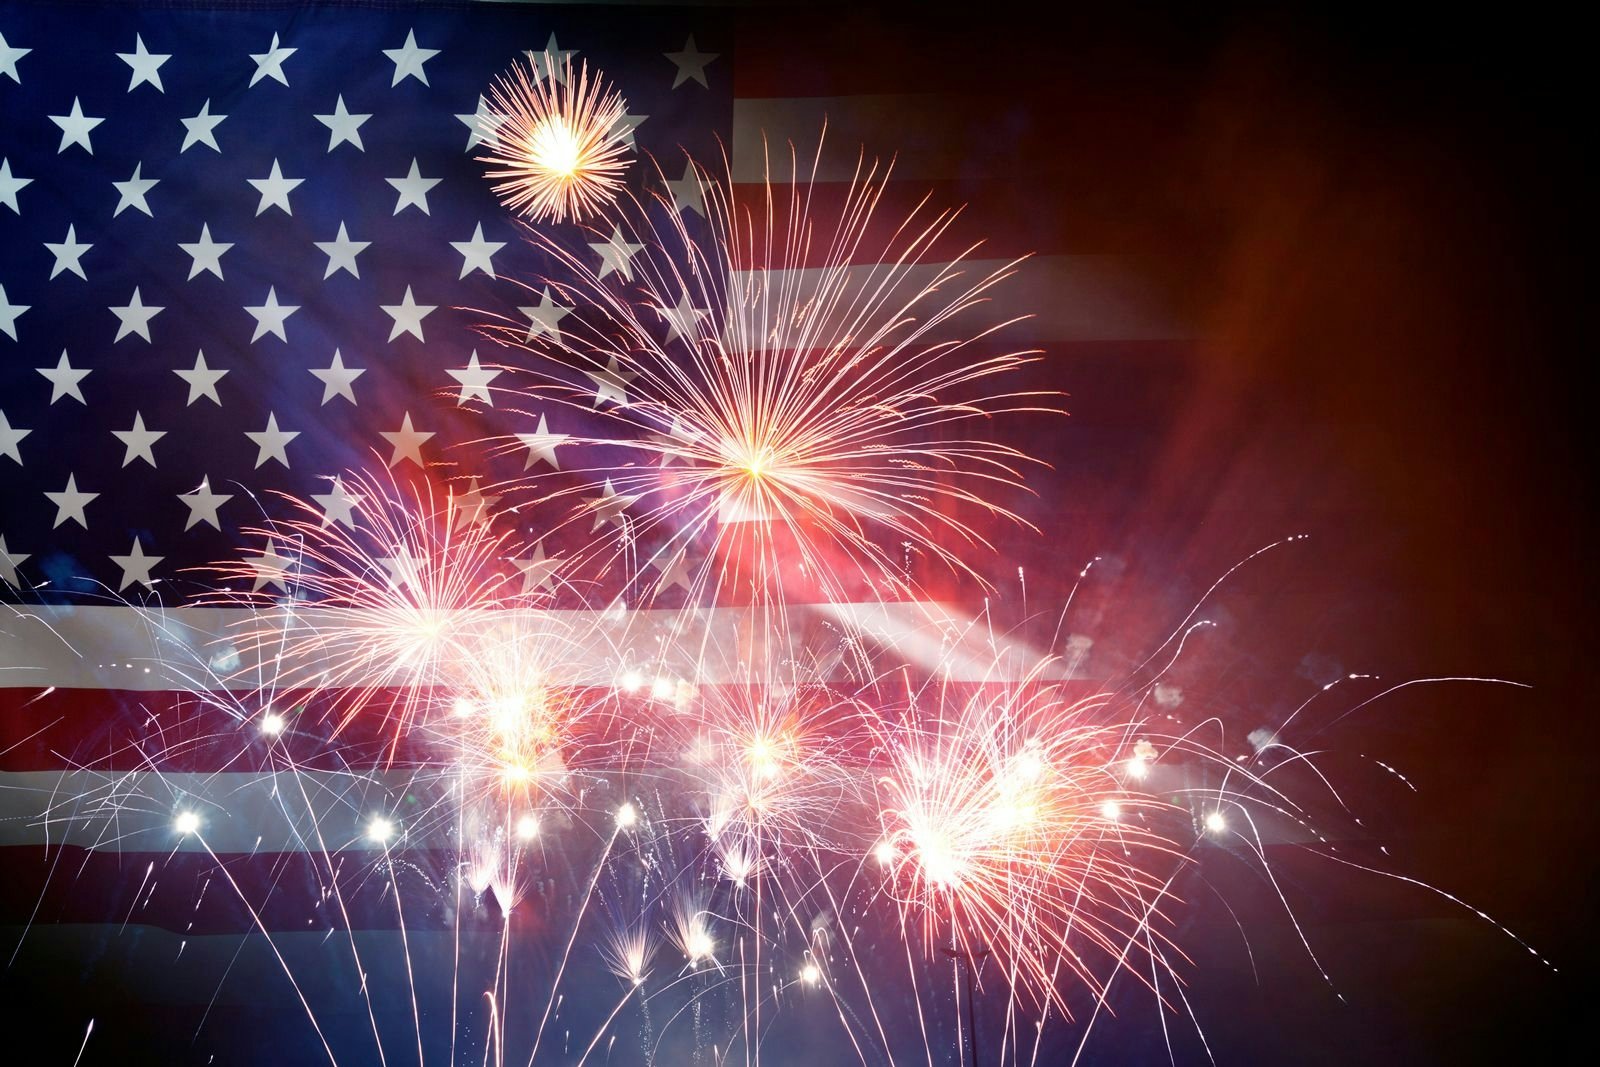 Fireworks against an American flag backdrop